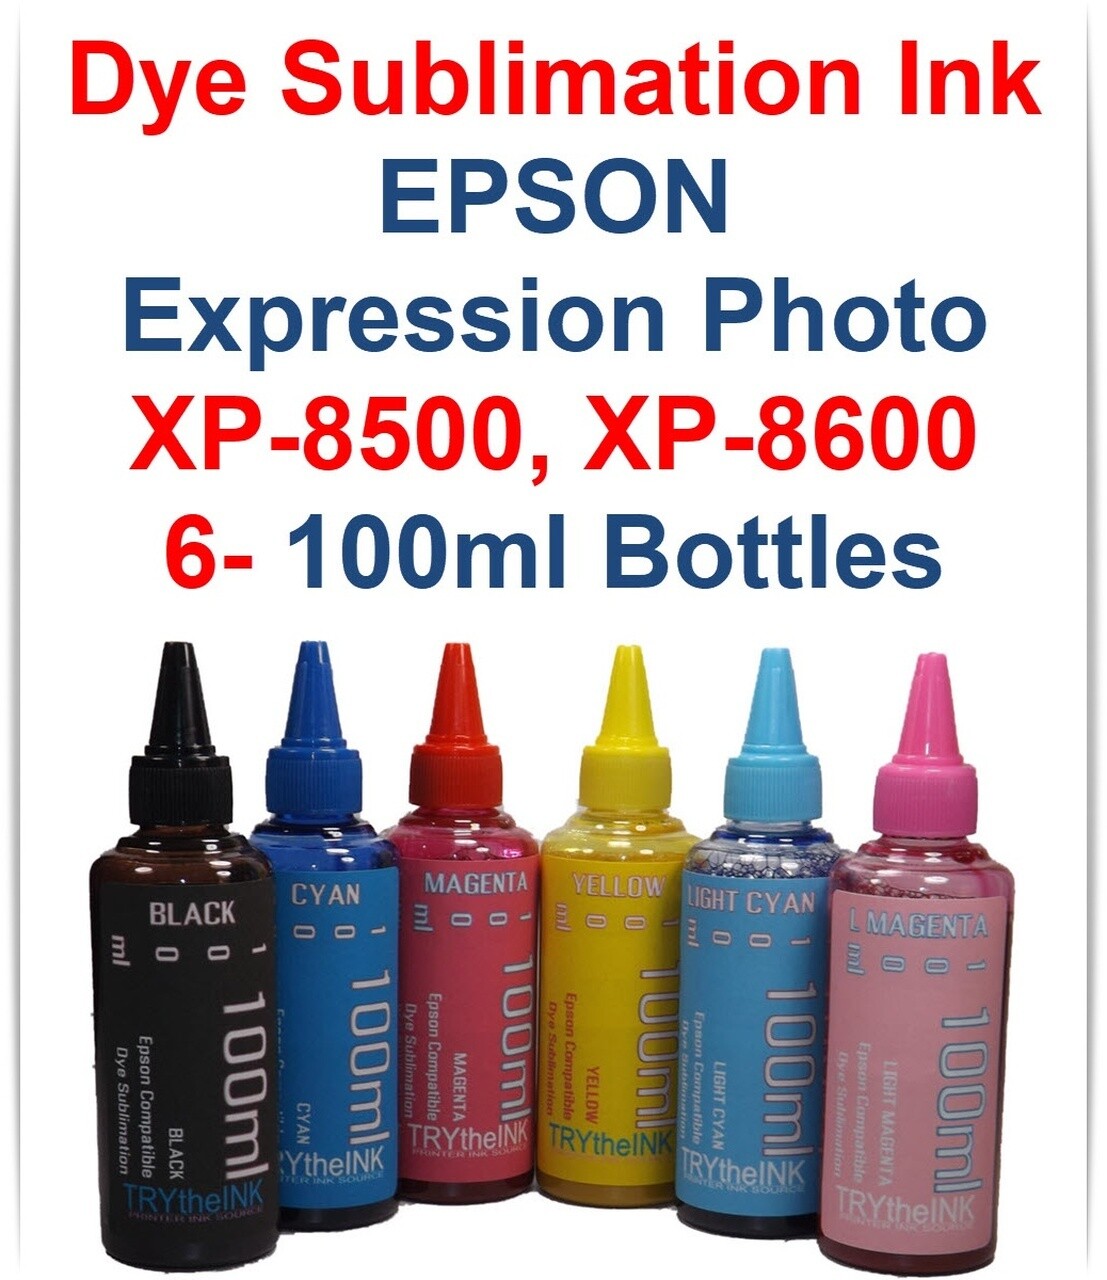 Dye Sublimation Ink 6- 100ml Bottles for Epson Expression XP-8500 printer